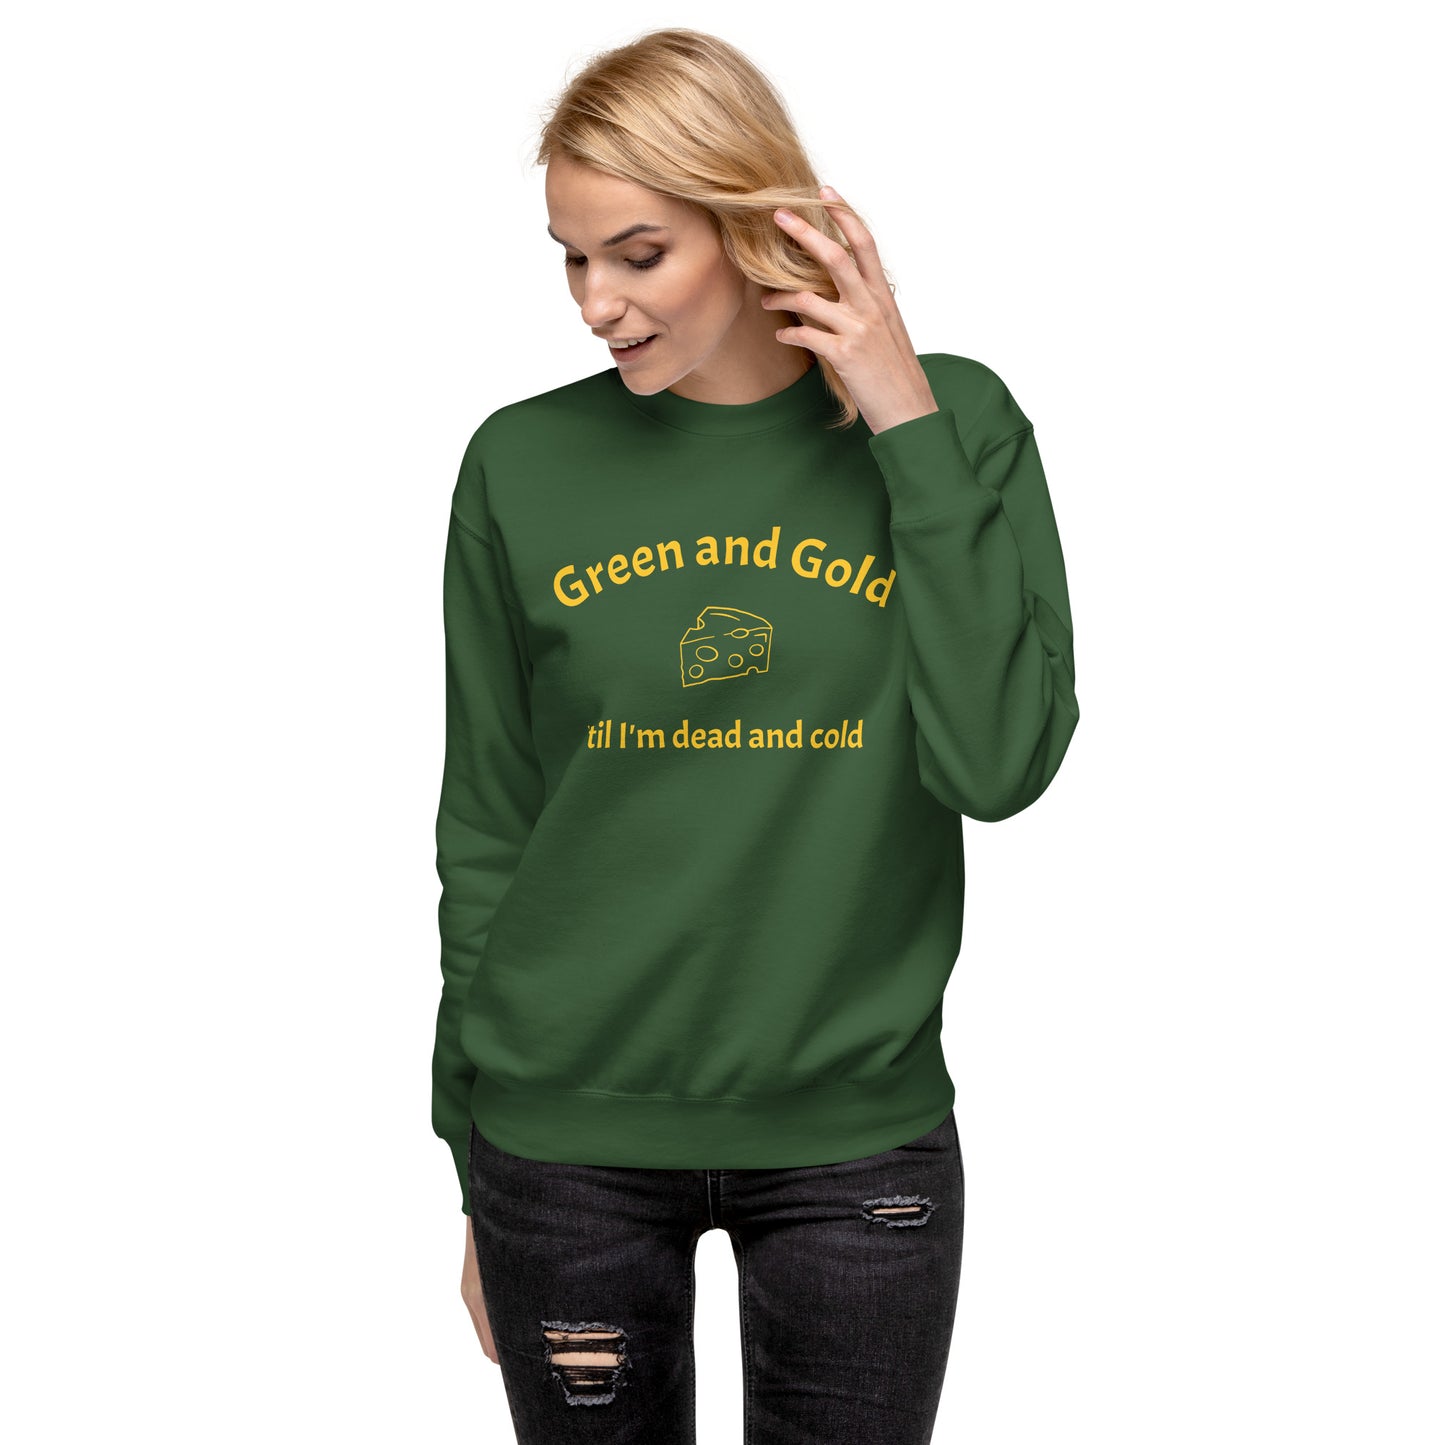 Green and Gold Premium Sweatshirt